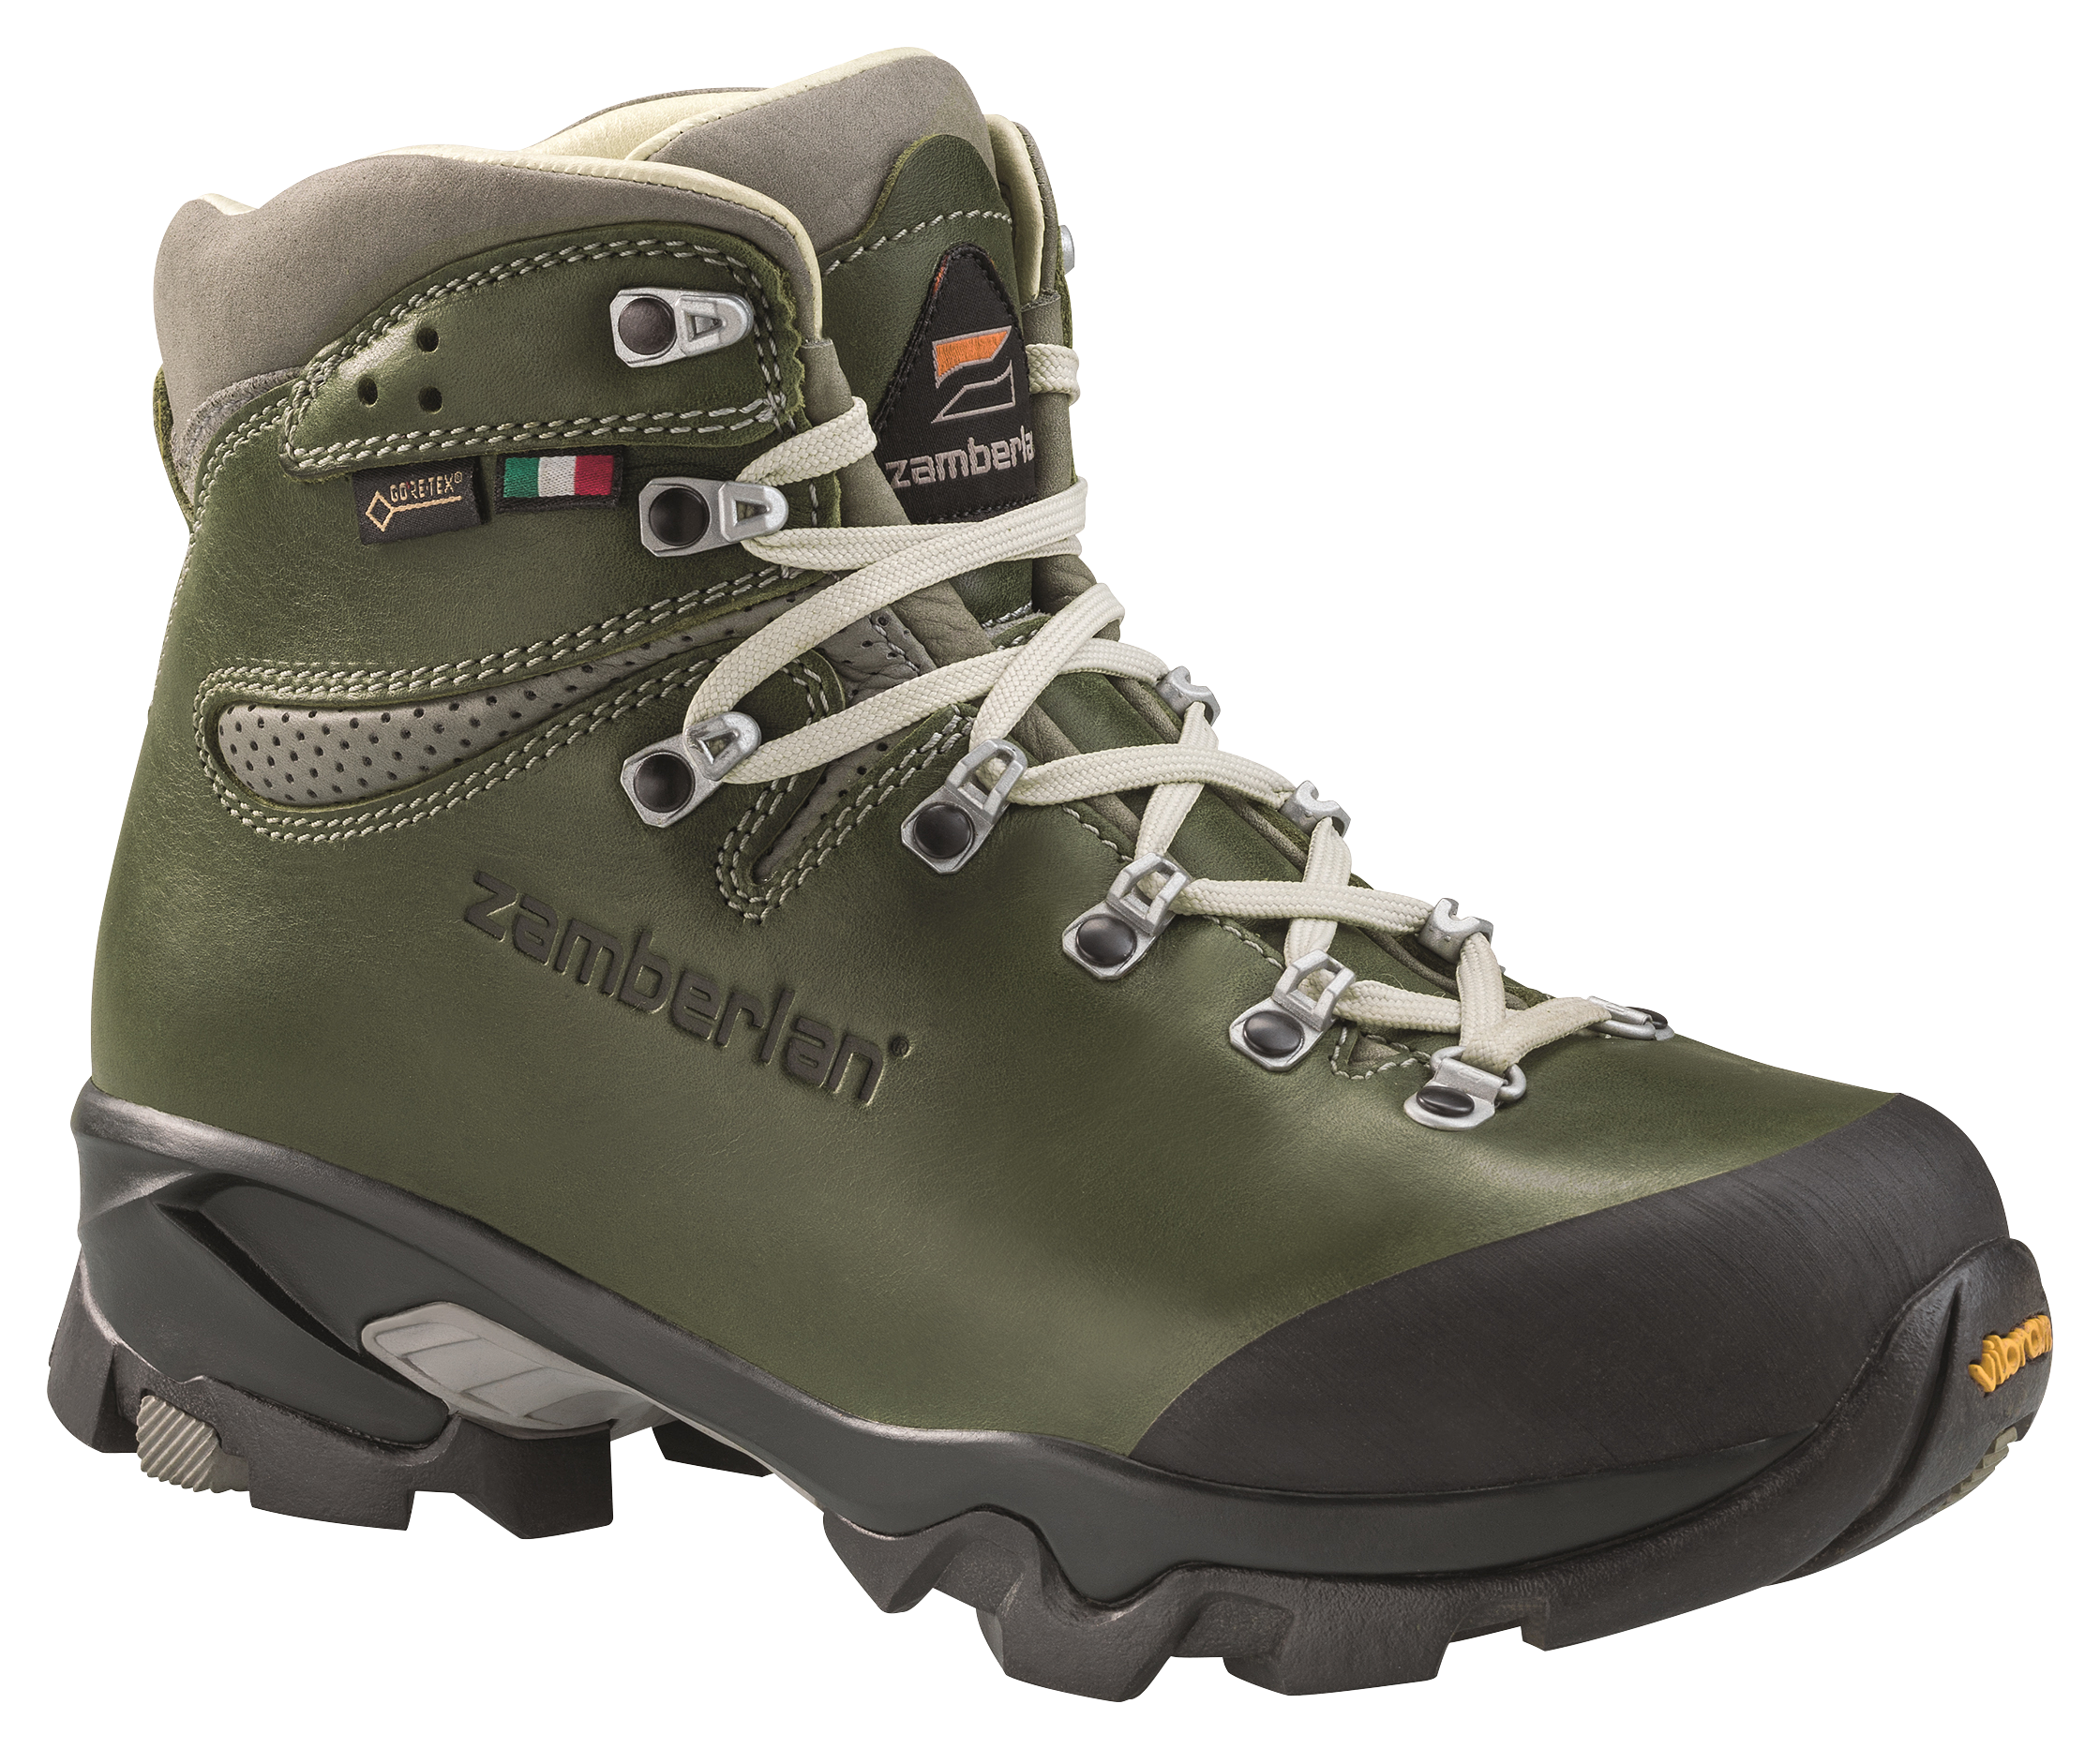 Zamberlan 1996 Vioz Lux GTX RR Waterproof Hiking Boots for Ladies - Waxed Green - 8.5M